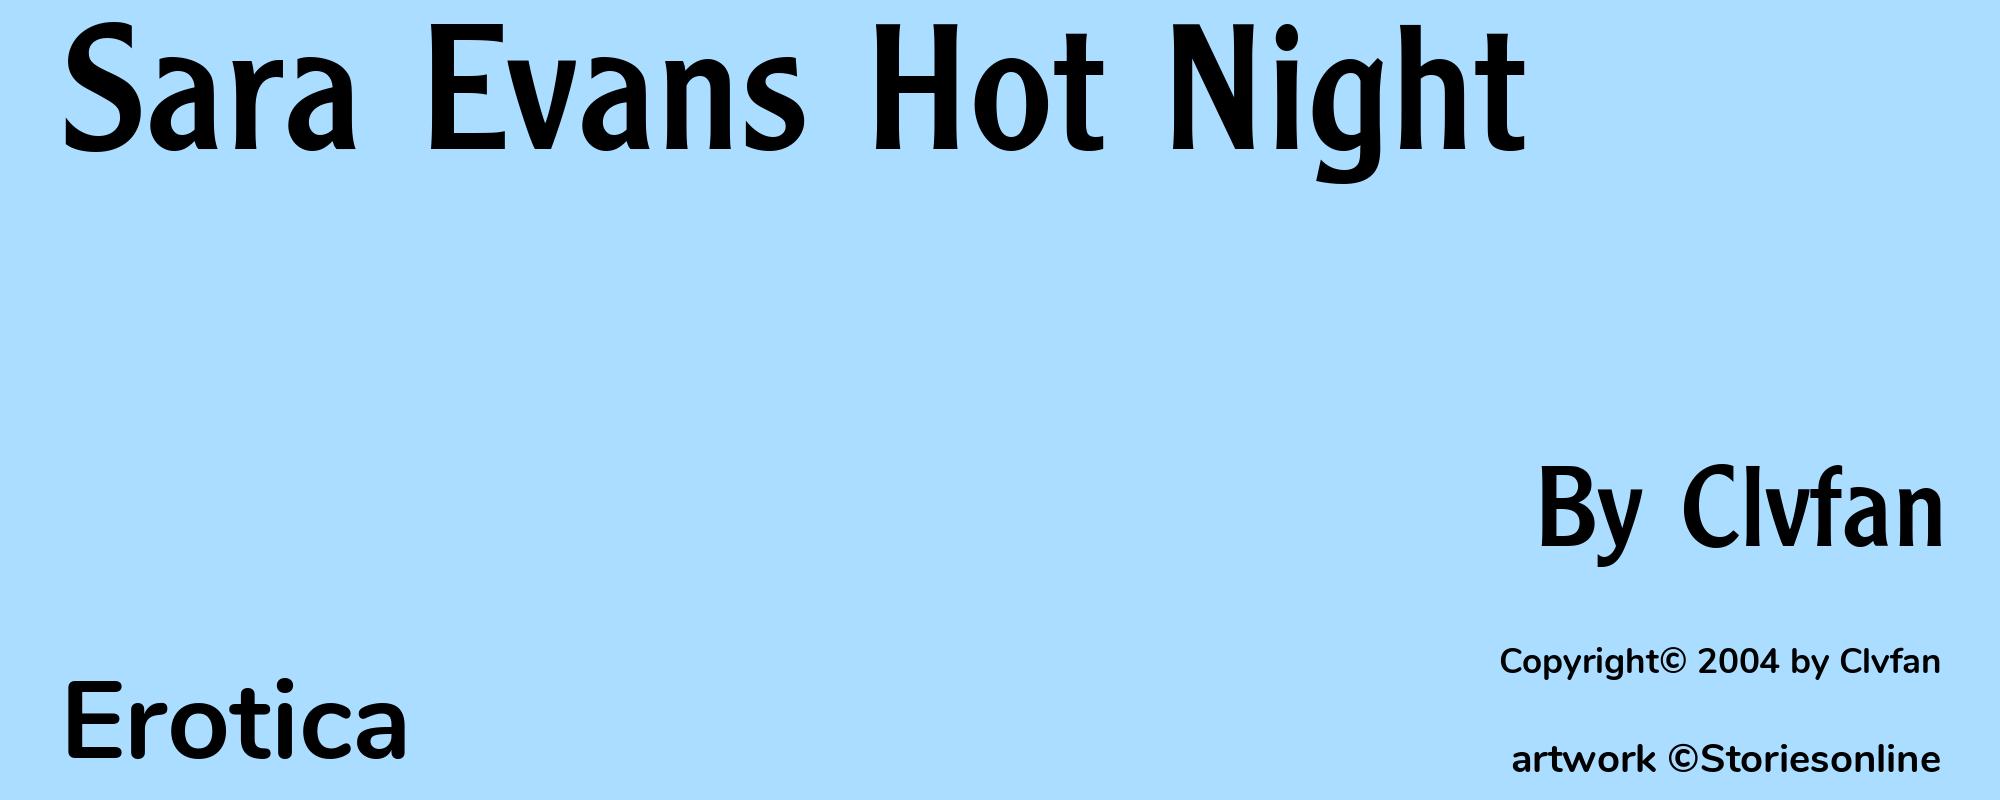 Sara Evans Hot Night - Cover